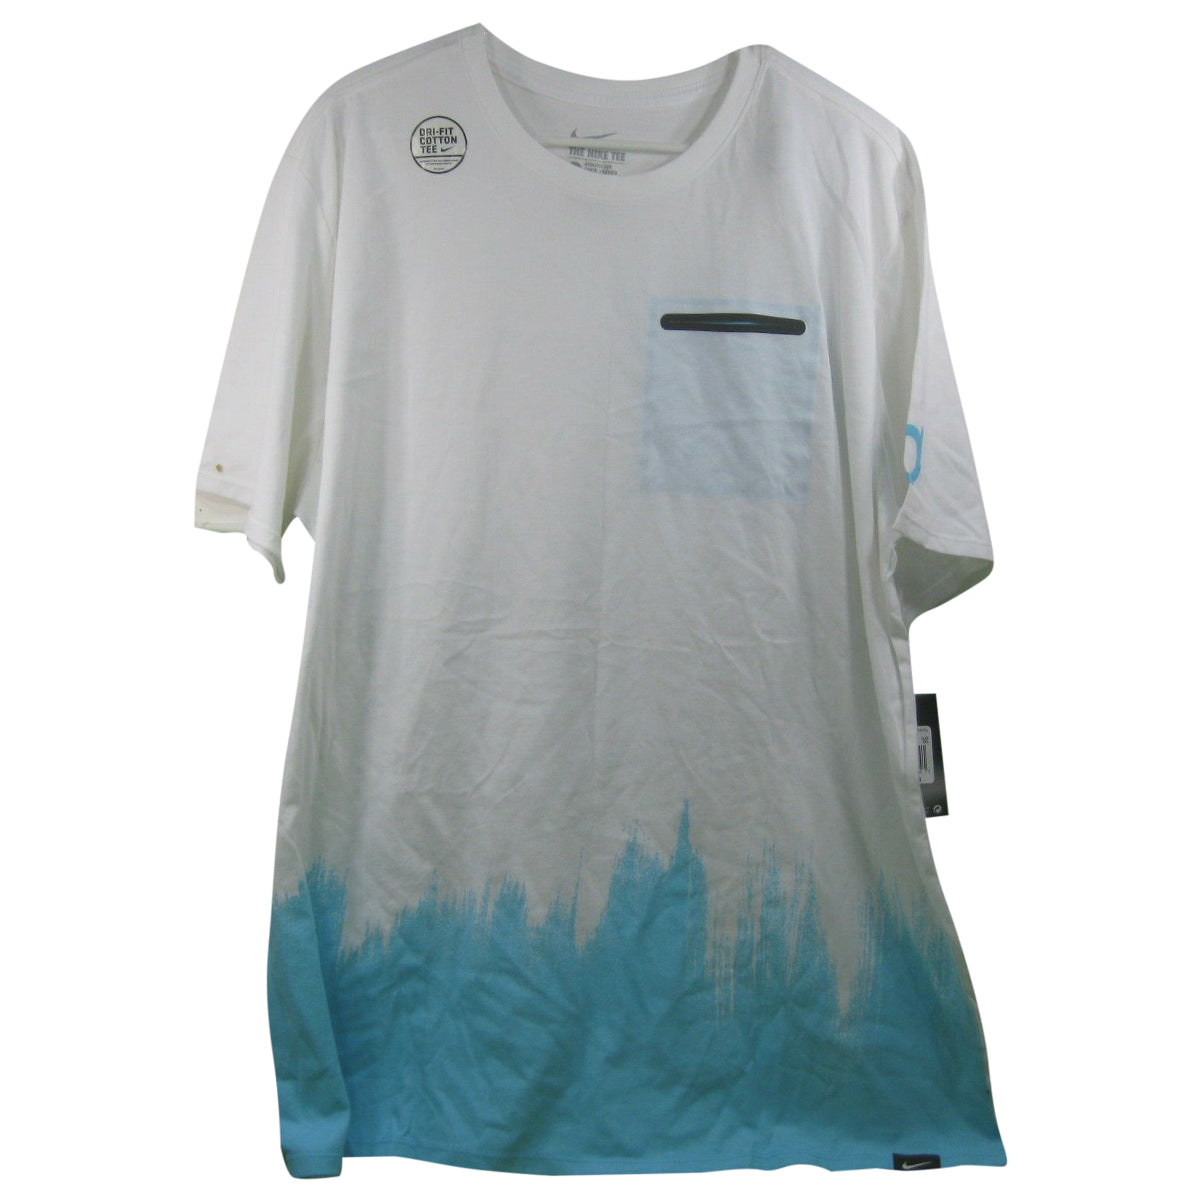 Nike Dri-fit T-shirt Mens Style : 802230